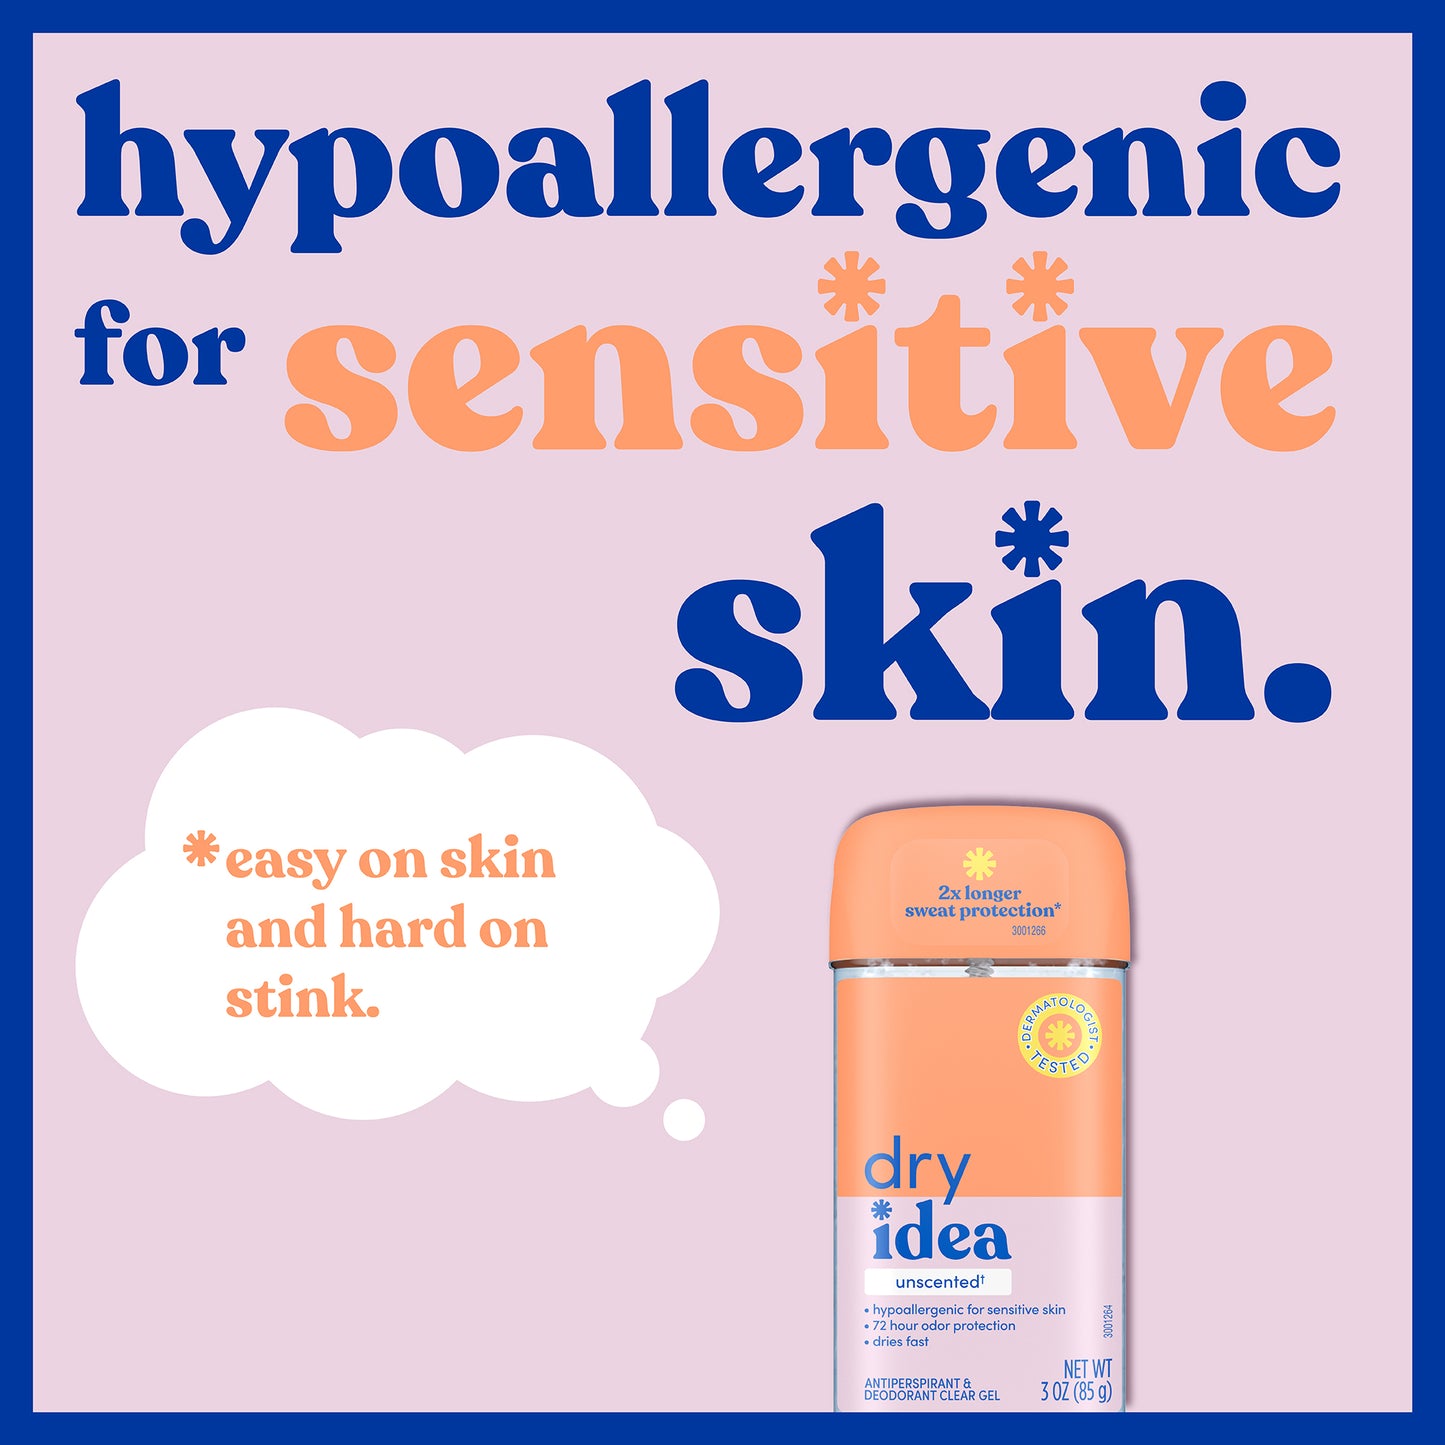 Hypoallergenic for sensitive skin